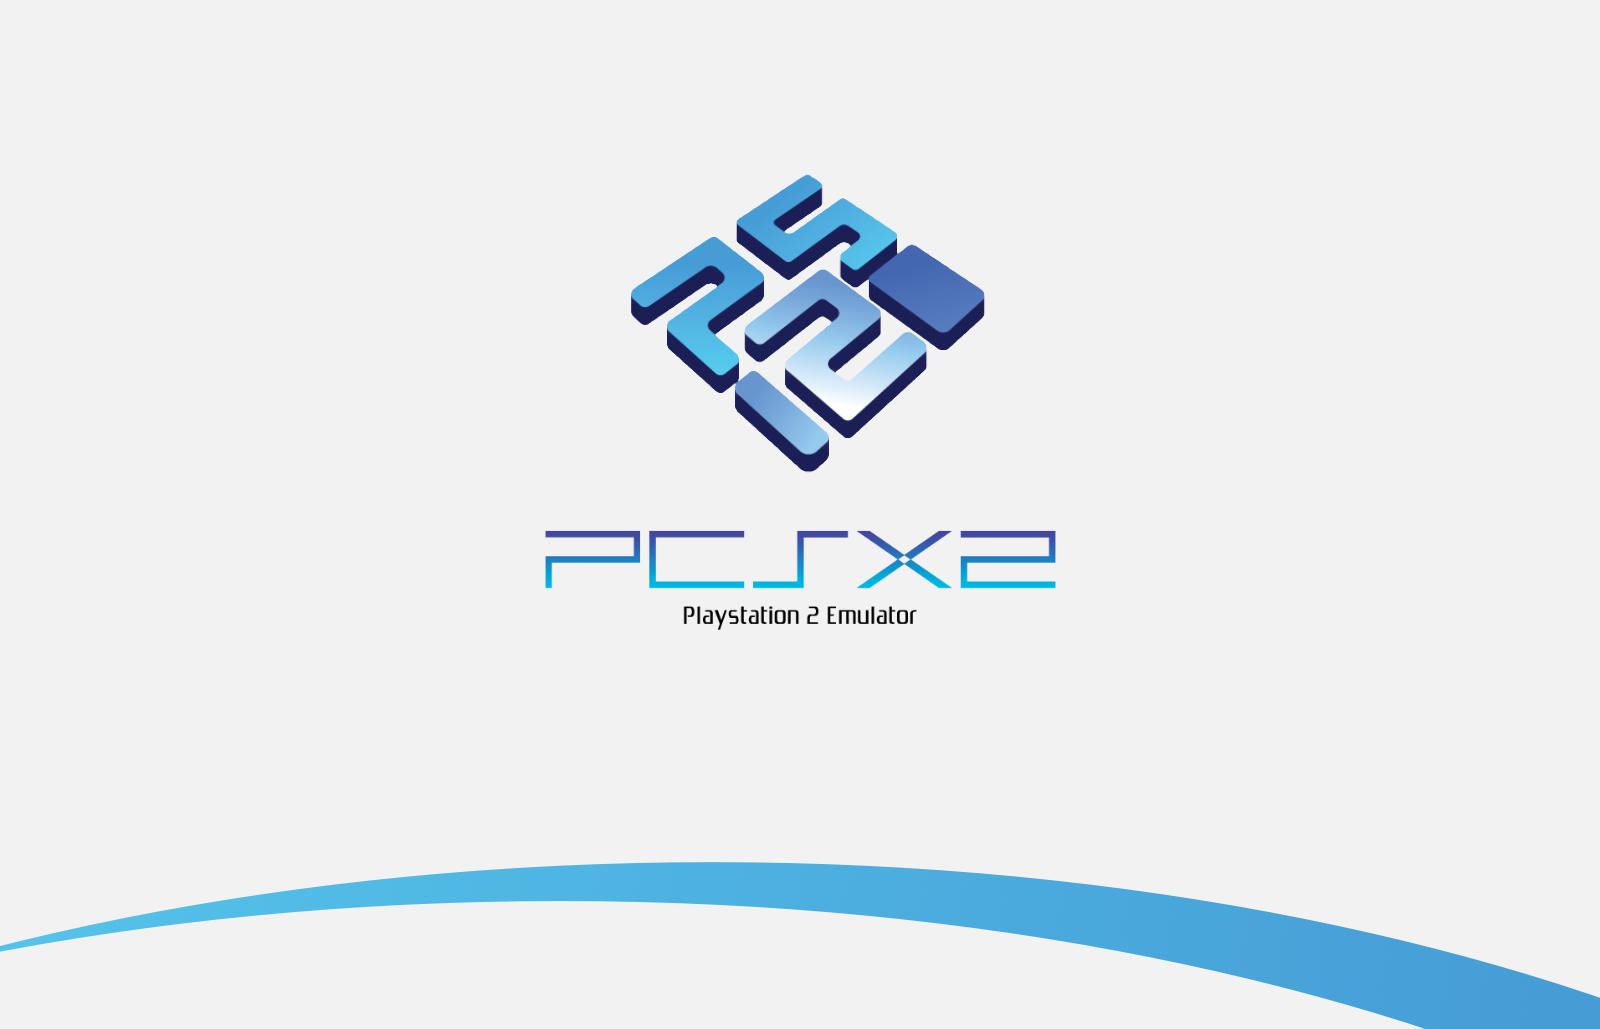 PS2 Emulator For PC